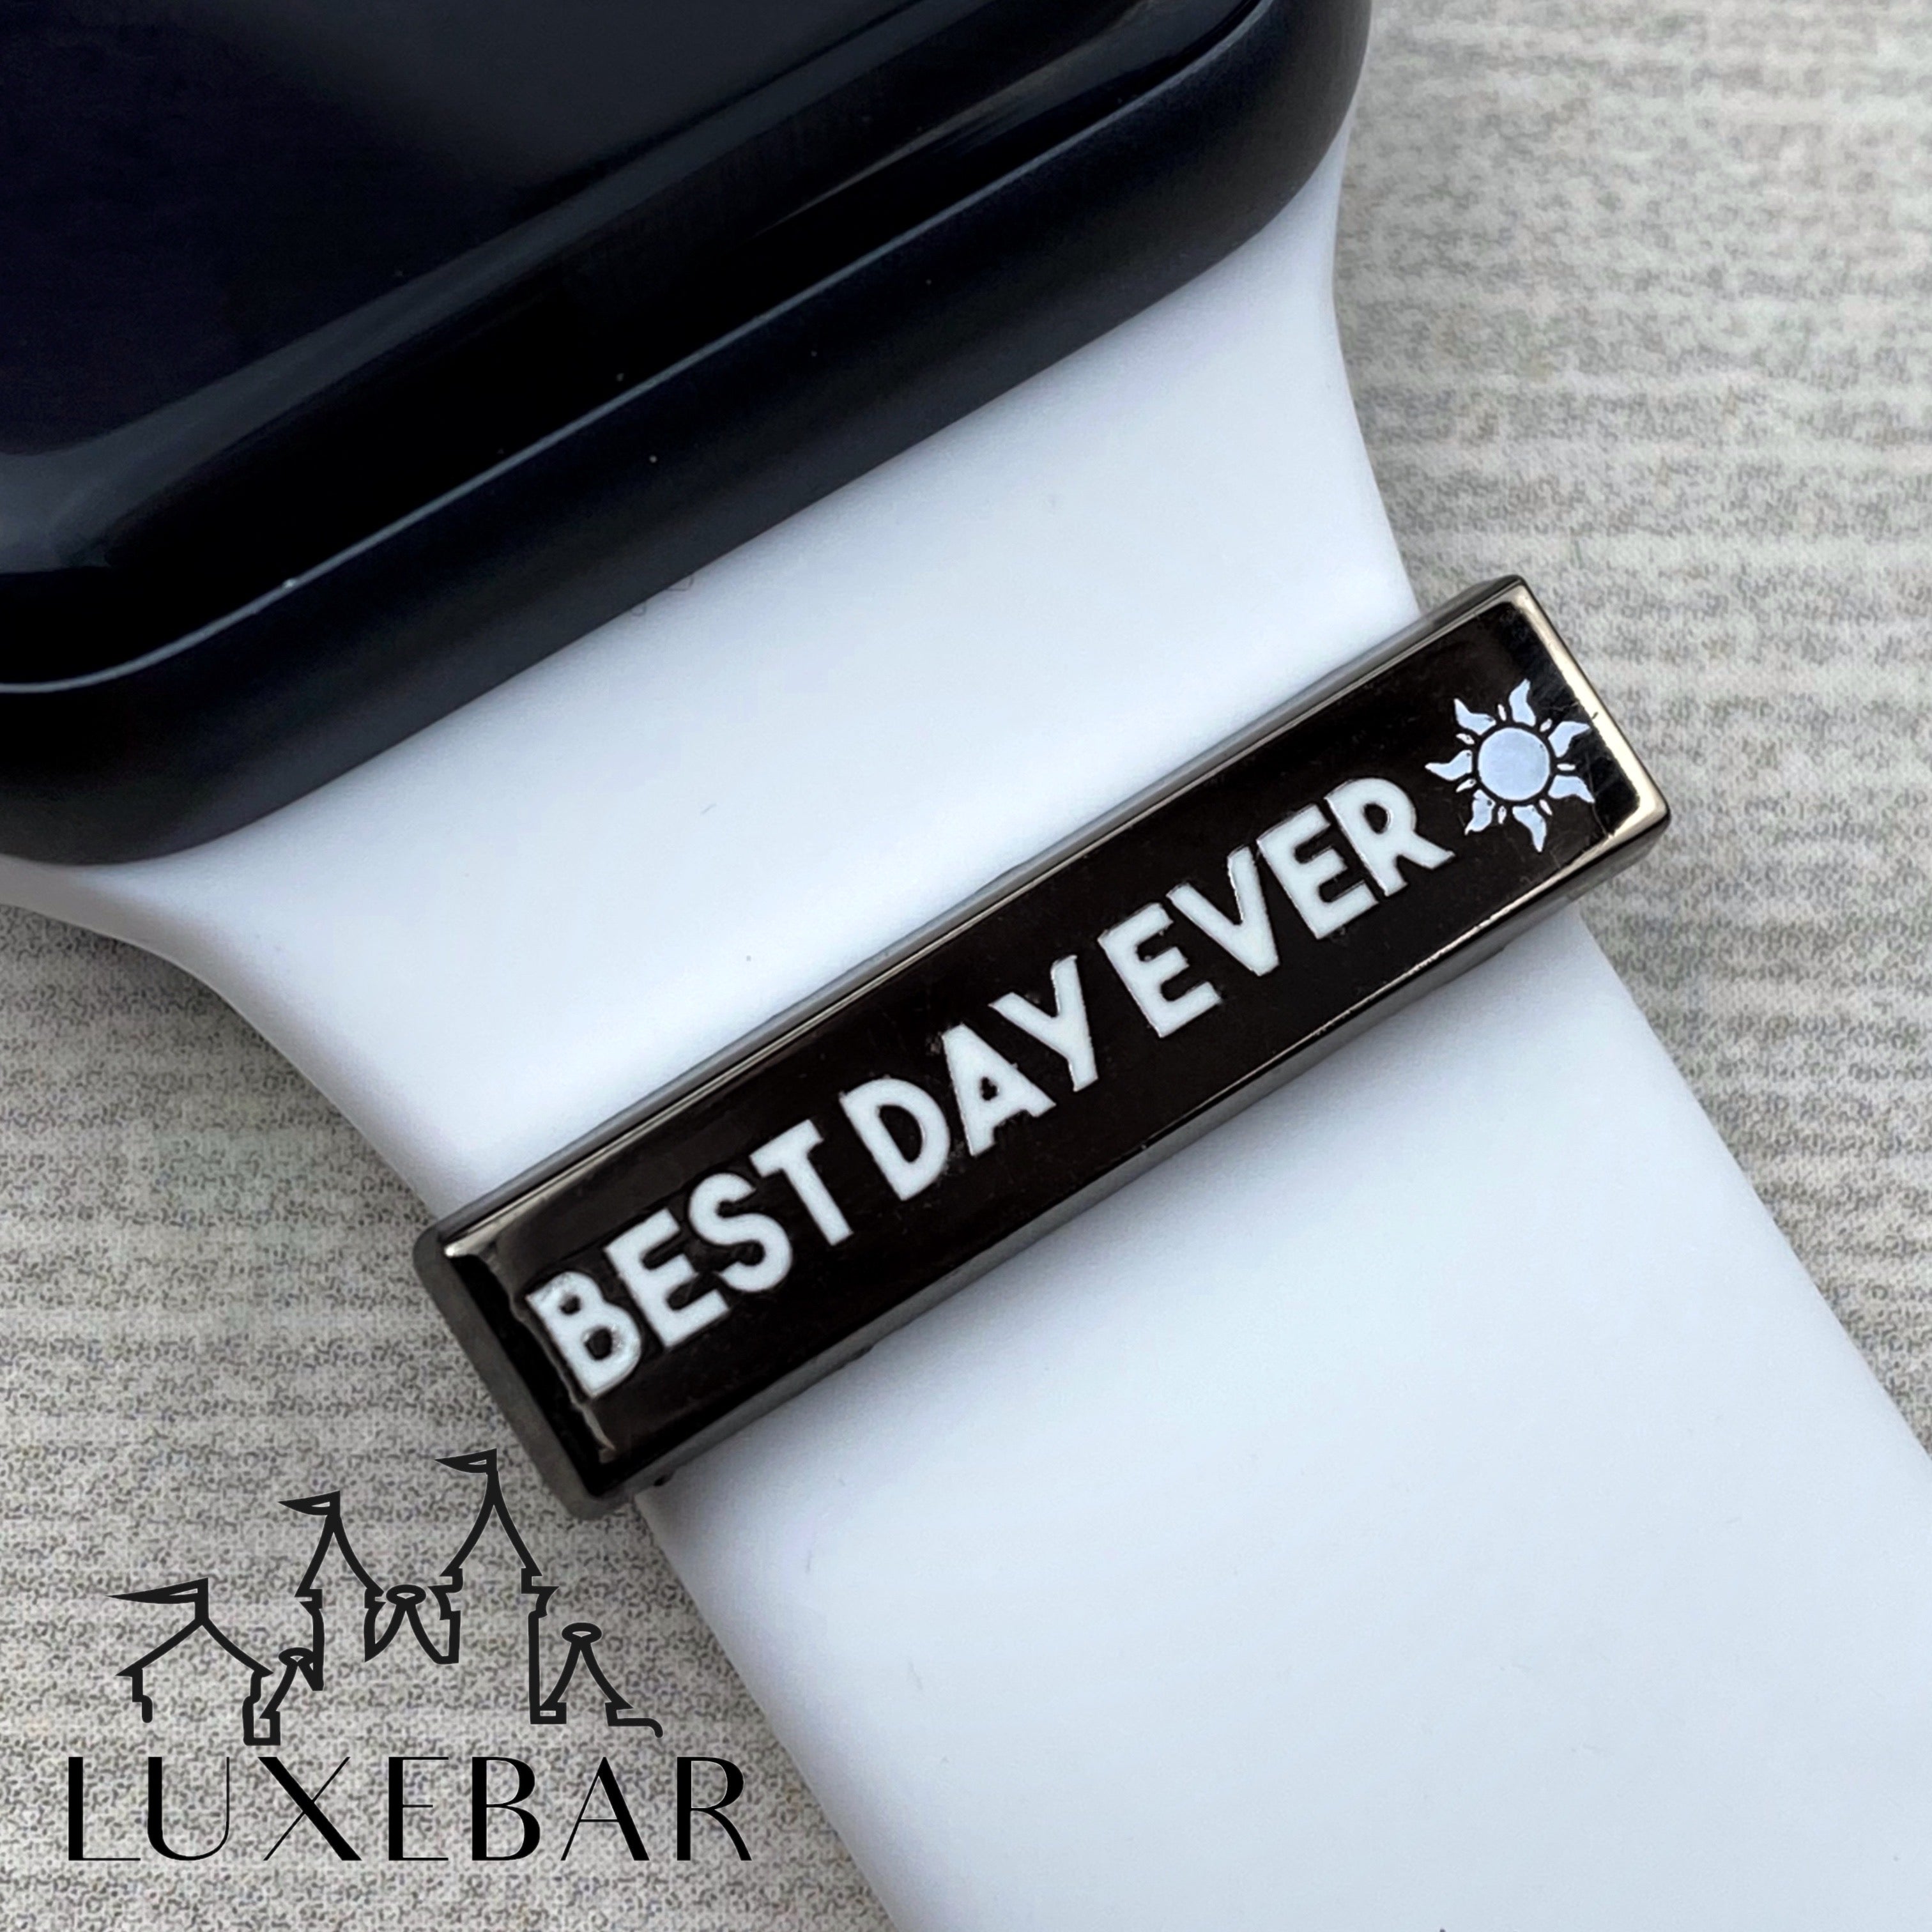 LuxeBar ~ Best Day Ever & Dreamer MARKDOWN